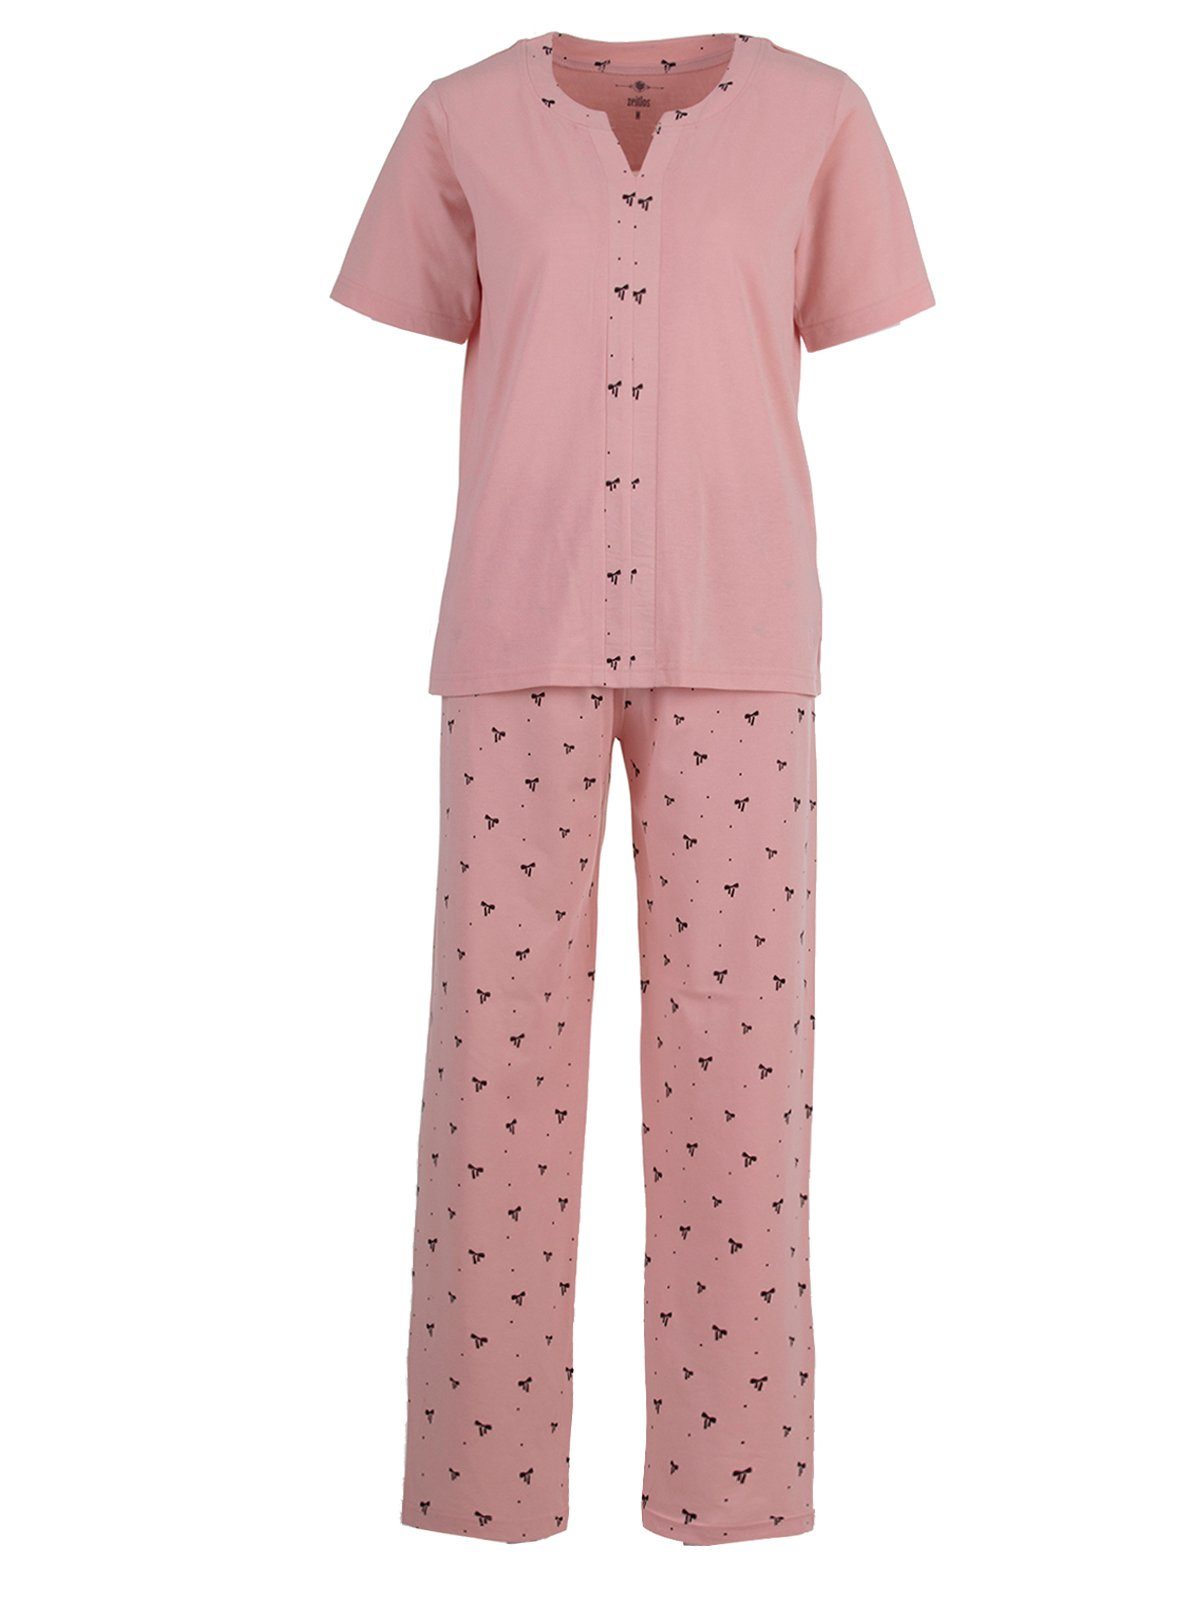 zeitlos Schlafanzug Pyjama Set Kurzarm - Schleife rosa